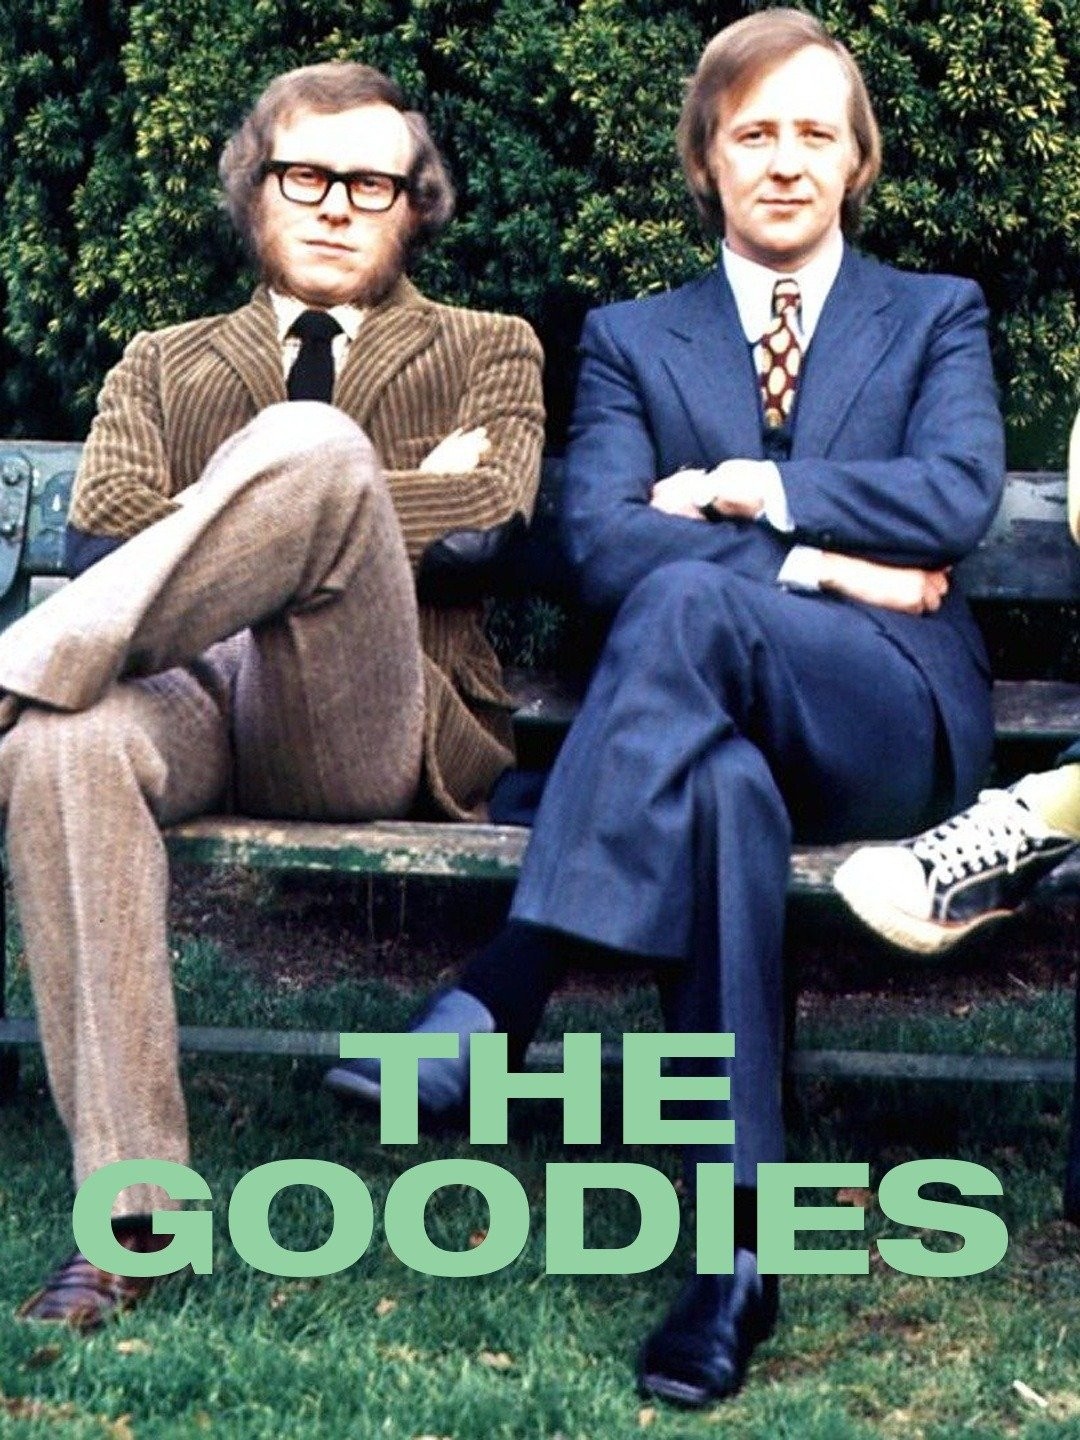 The Goodies (TV series) - Wikipedia